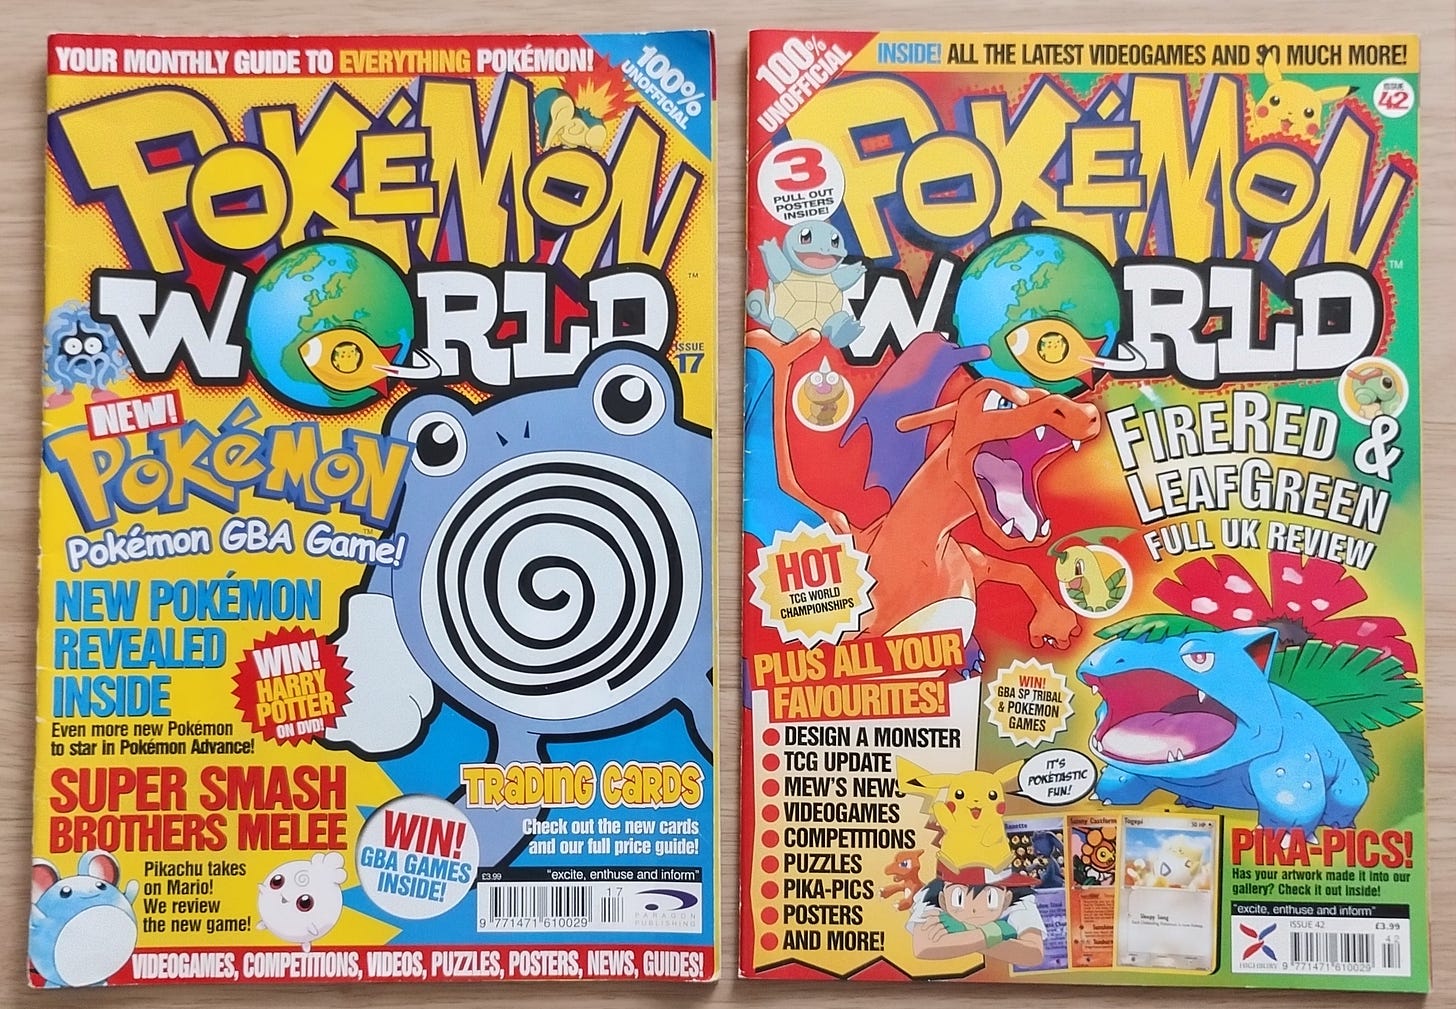 Issue 17 and Issue 42 of Pokémon World Magazine